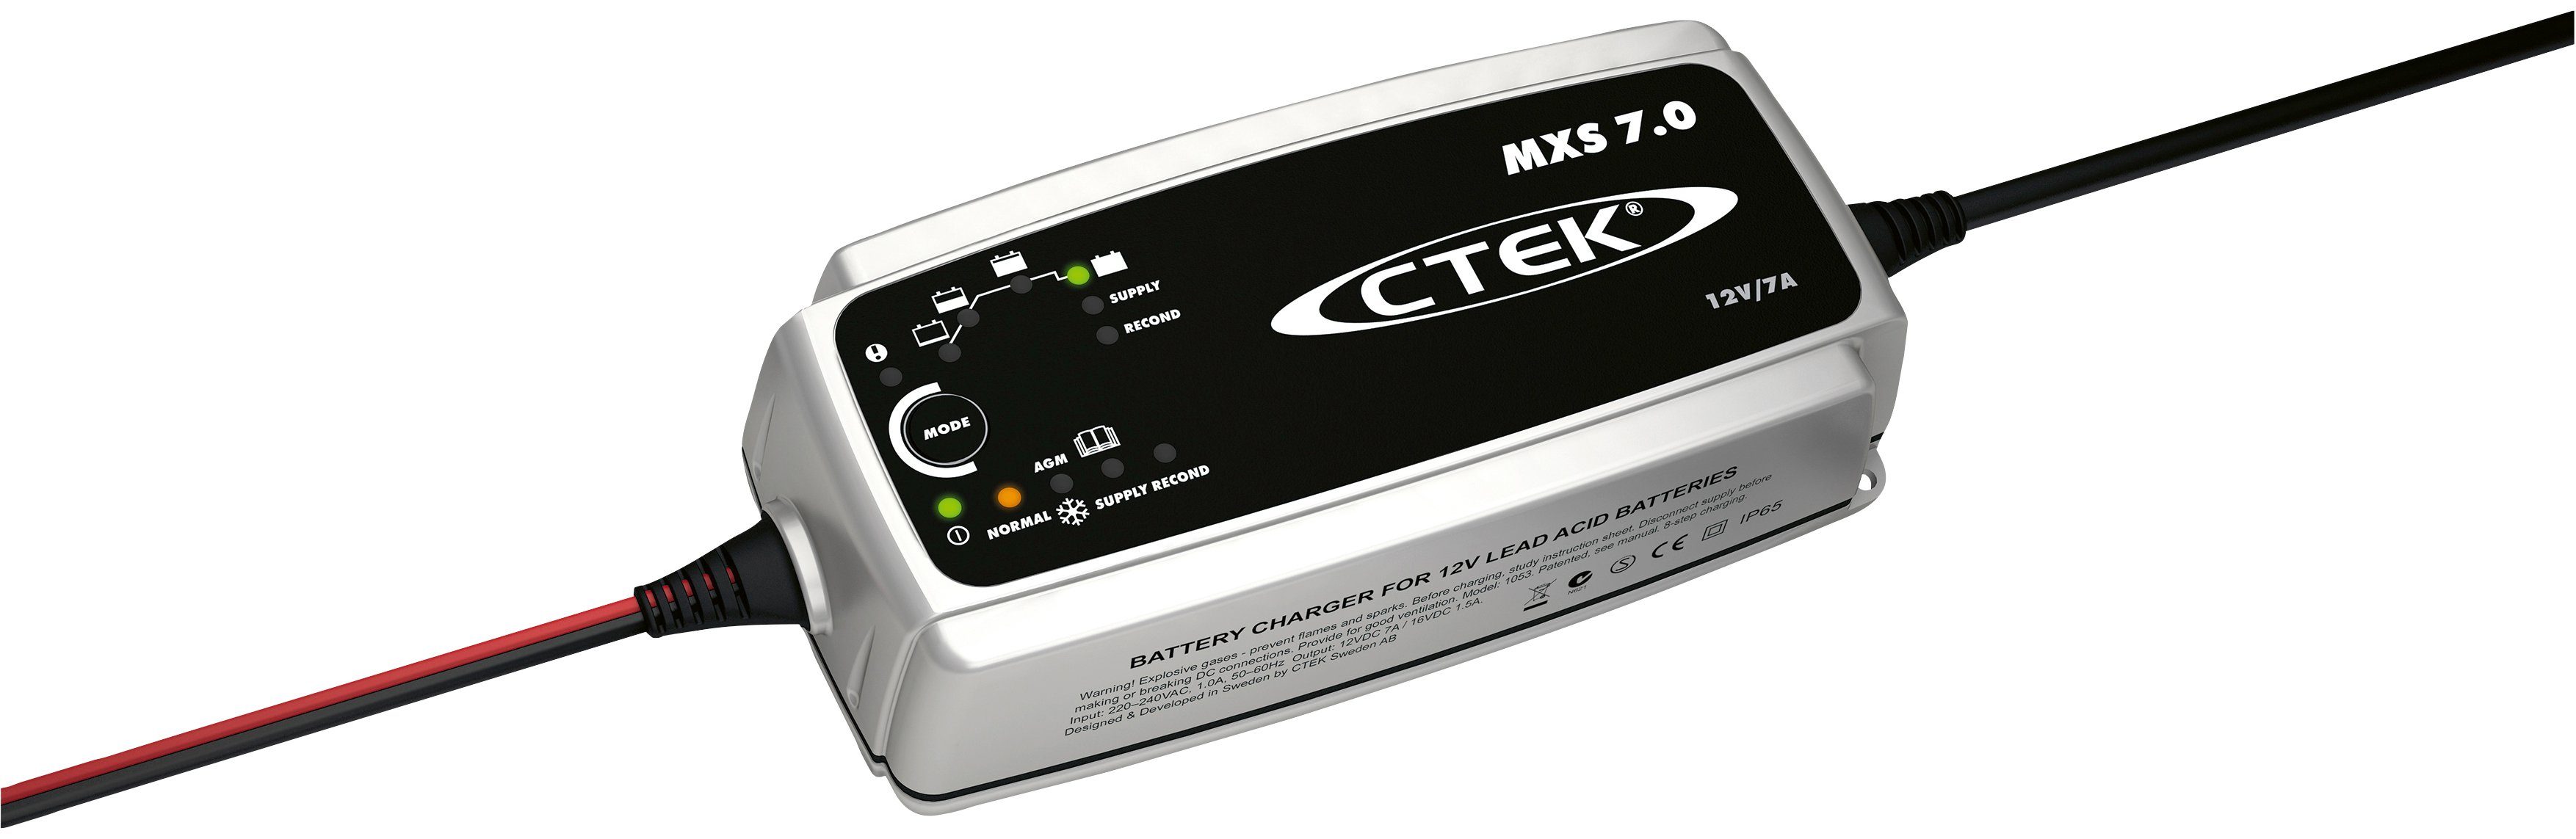 CTEK CT5 Time to Go, Batterie-Ladegerät, mit Countdown-Display 12V 5A  EU-Stecker